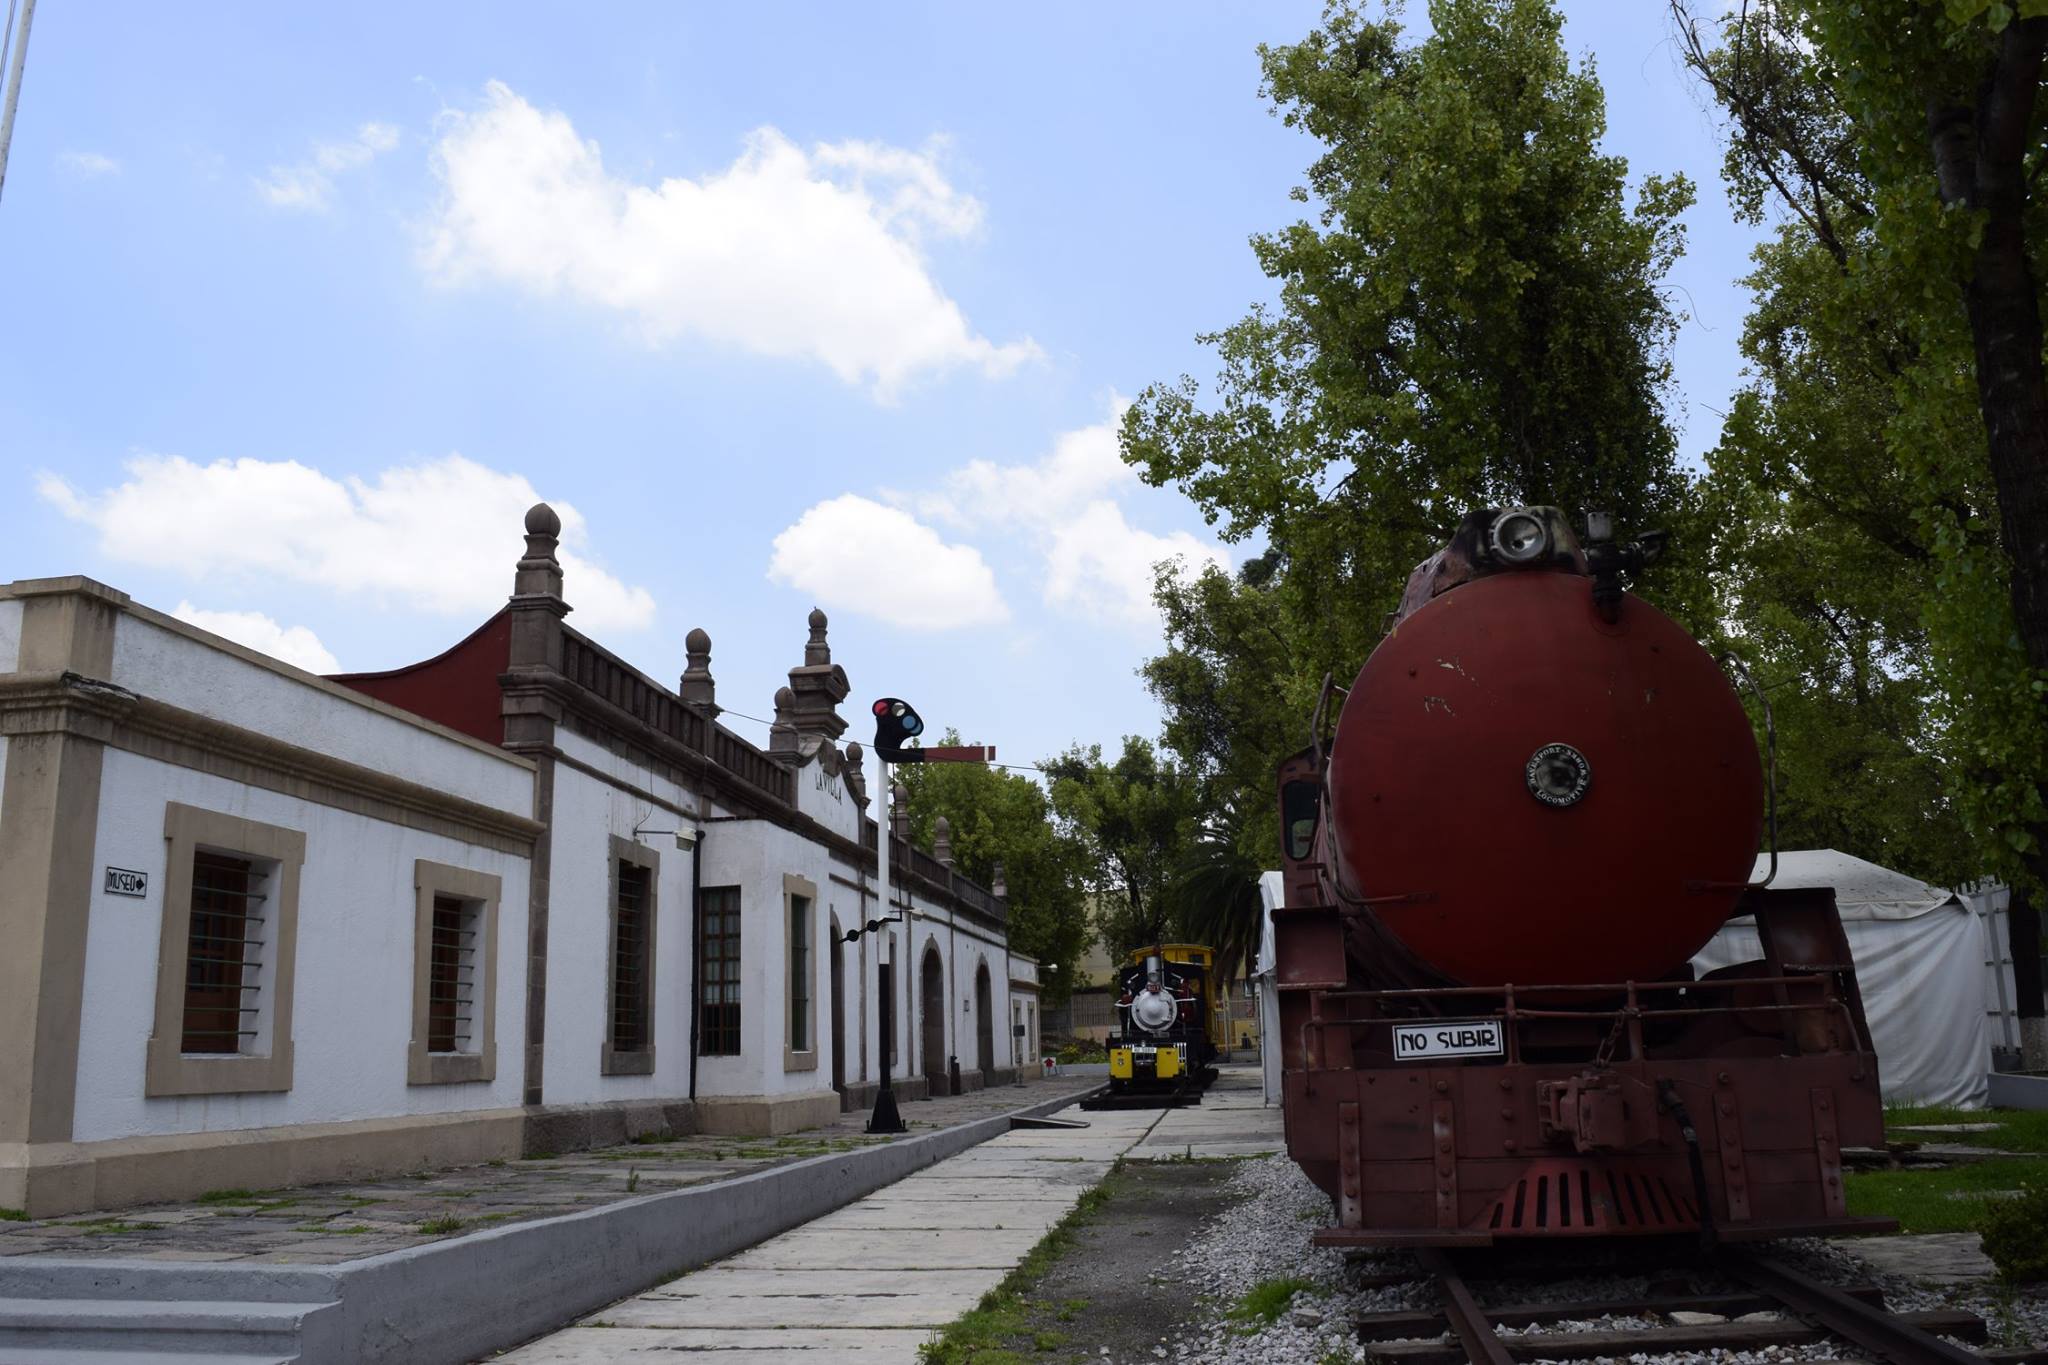 Mexico City Railroad Museum